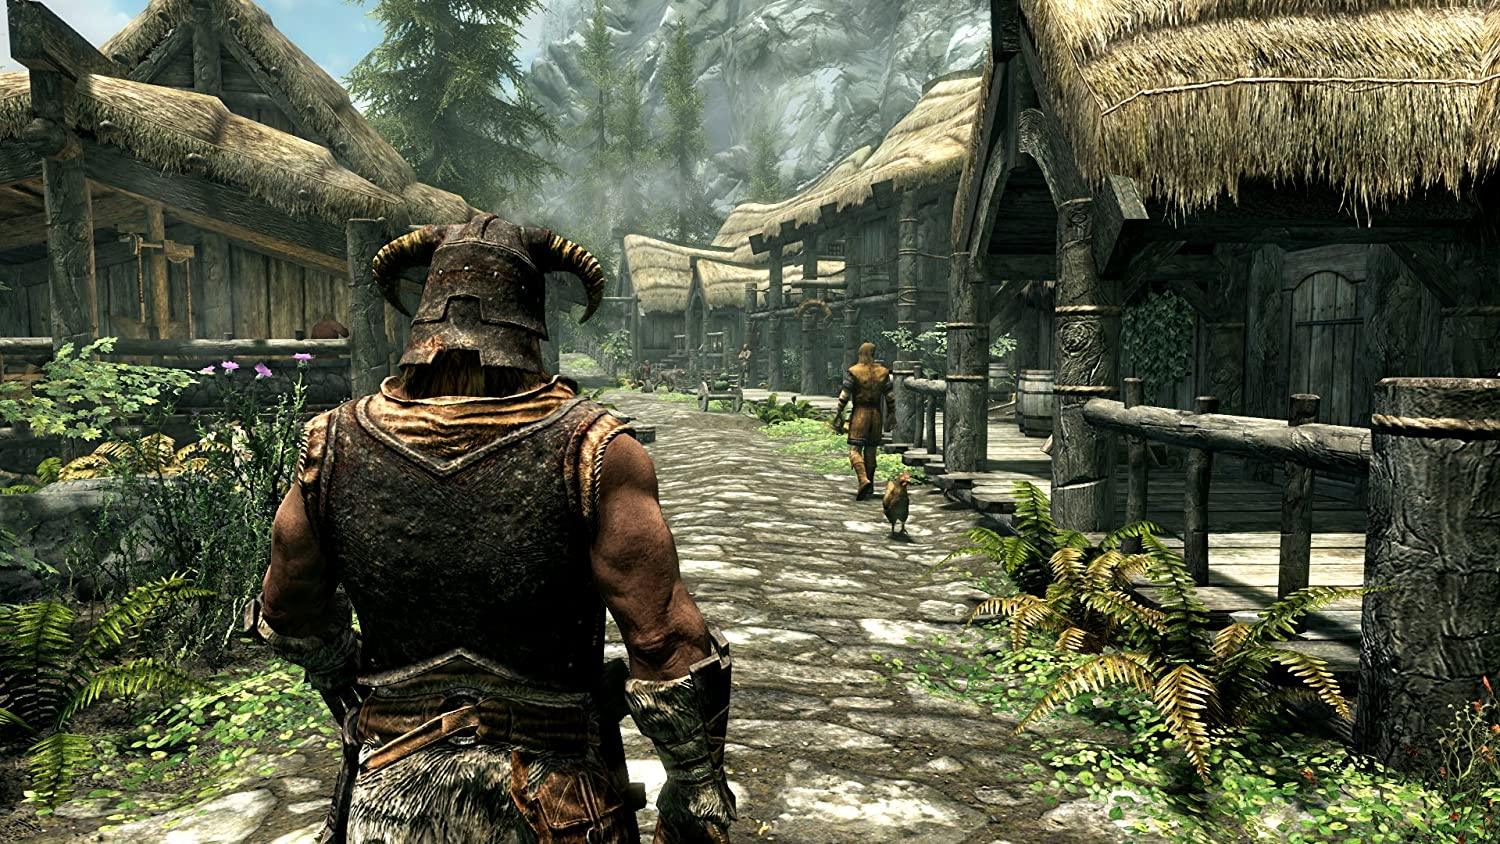 The Elder Scrolls V: Skyrim (Xbox 360) (Pre-owned) - GameStore.mt | Powered by Flutisat